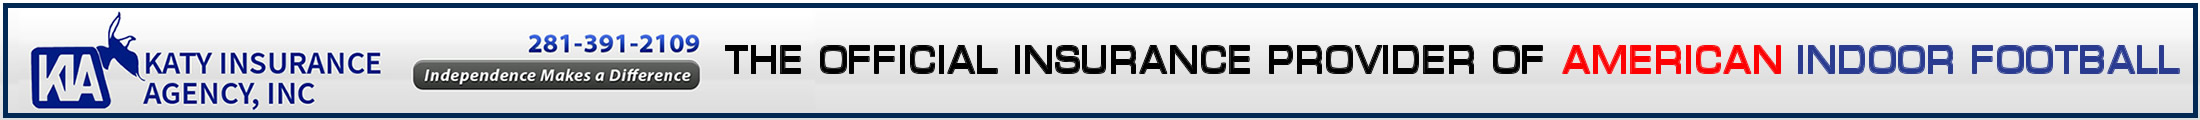 katy-insurance-large-banner